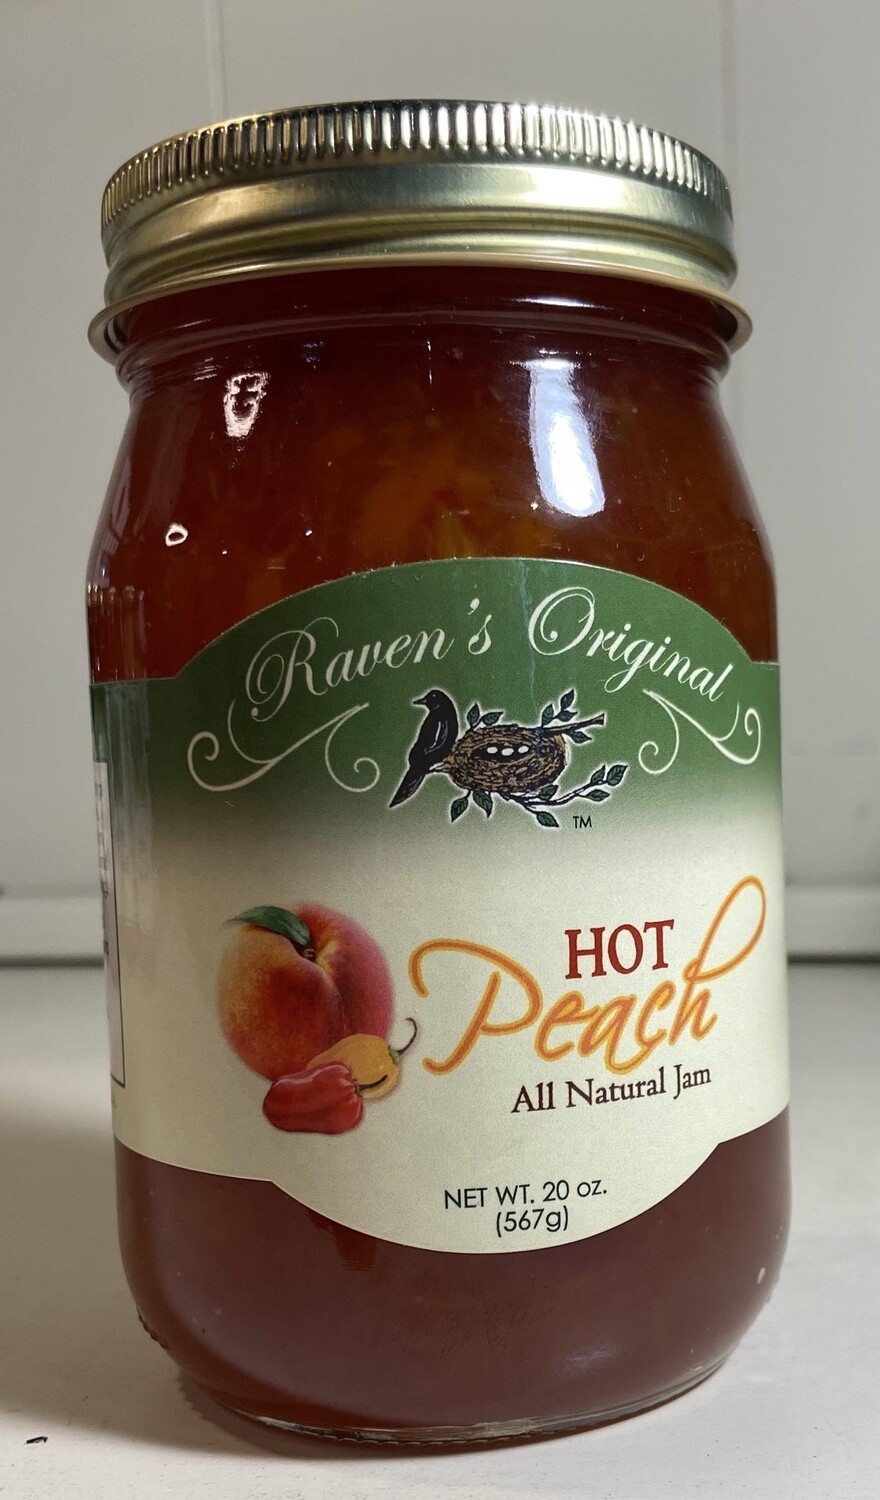 Raven's Original Hot Peach All Natural Jam